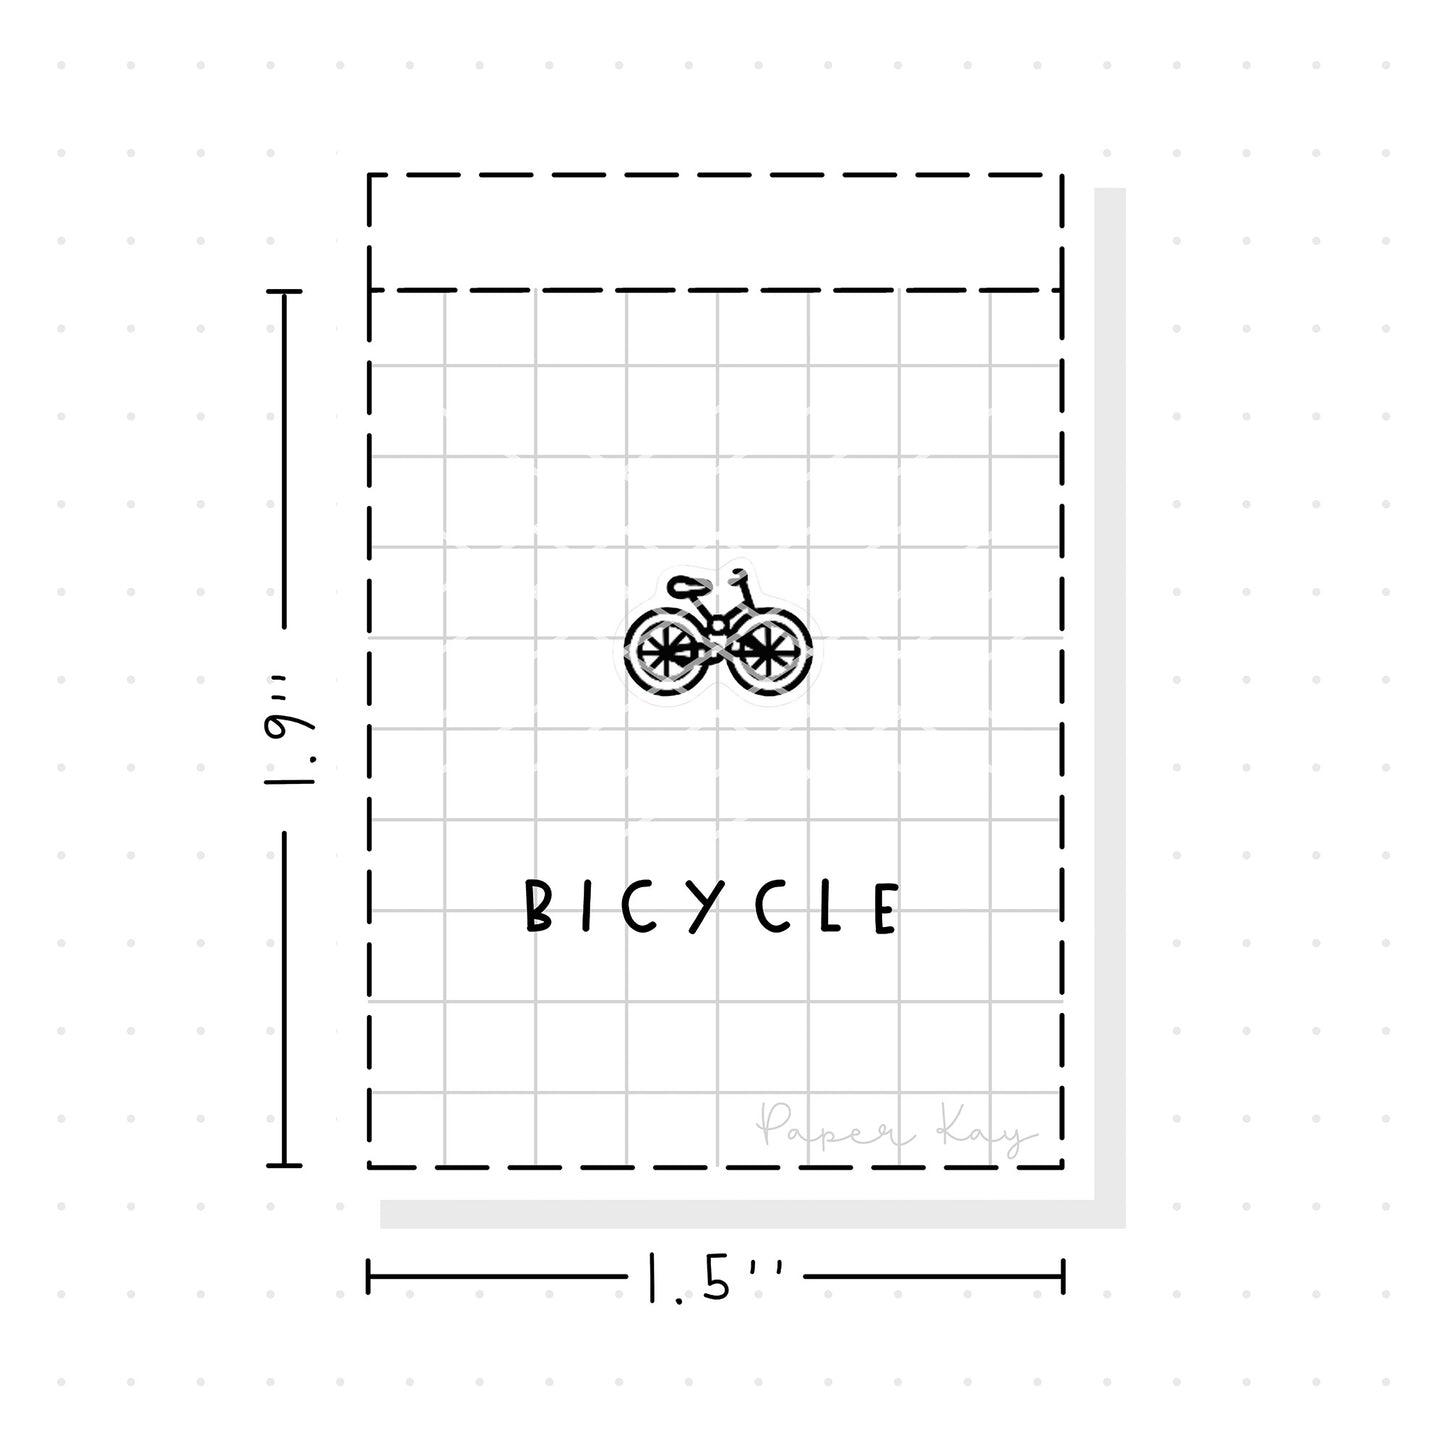 (PM207) Bicycle - Tiny Minimal Icon Stickers